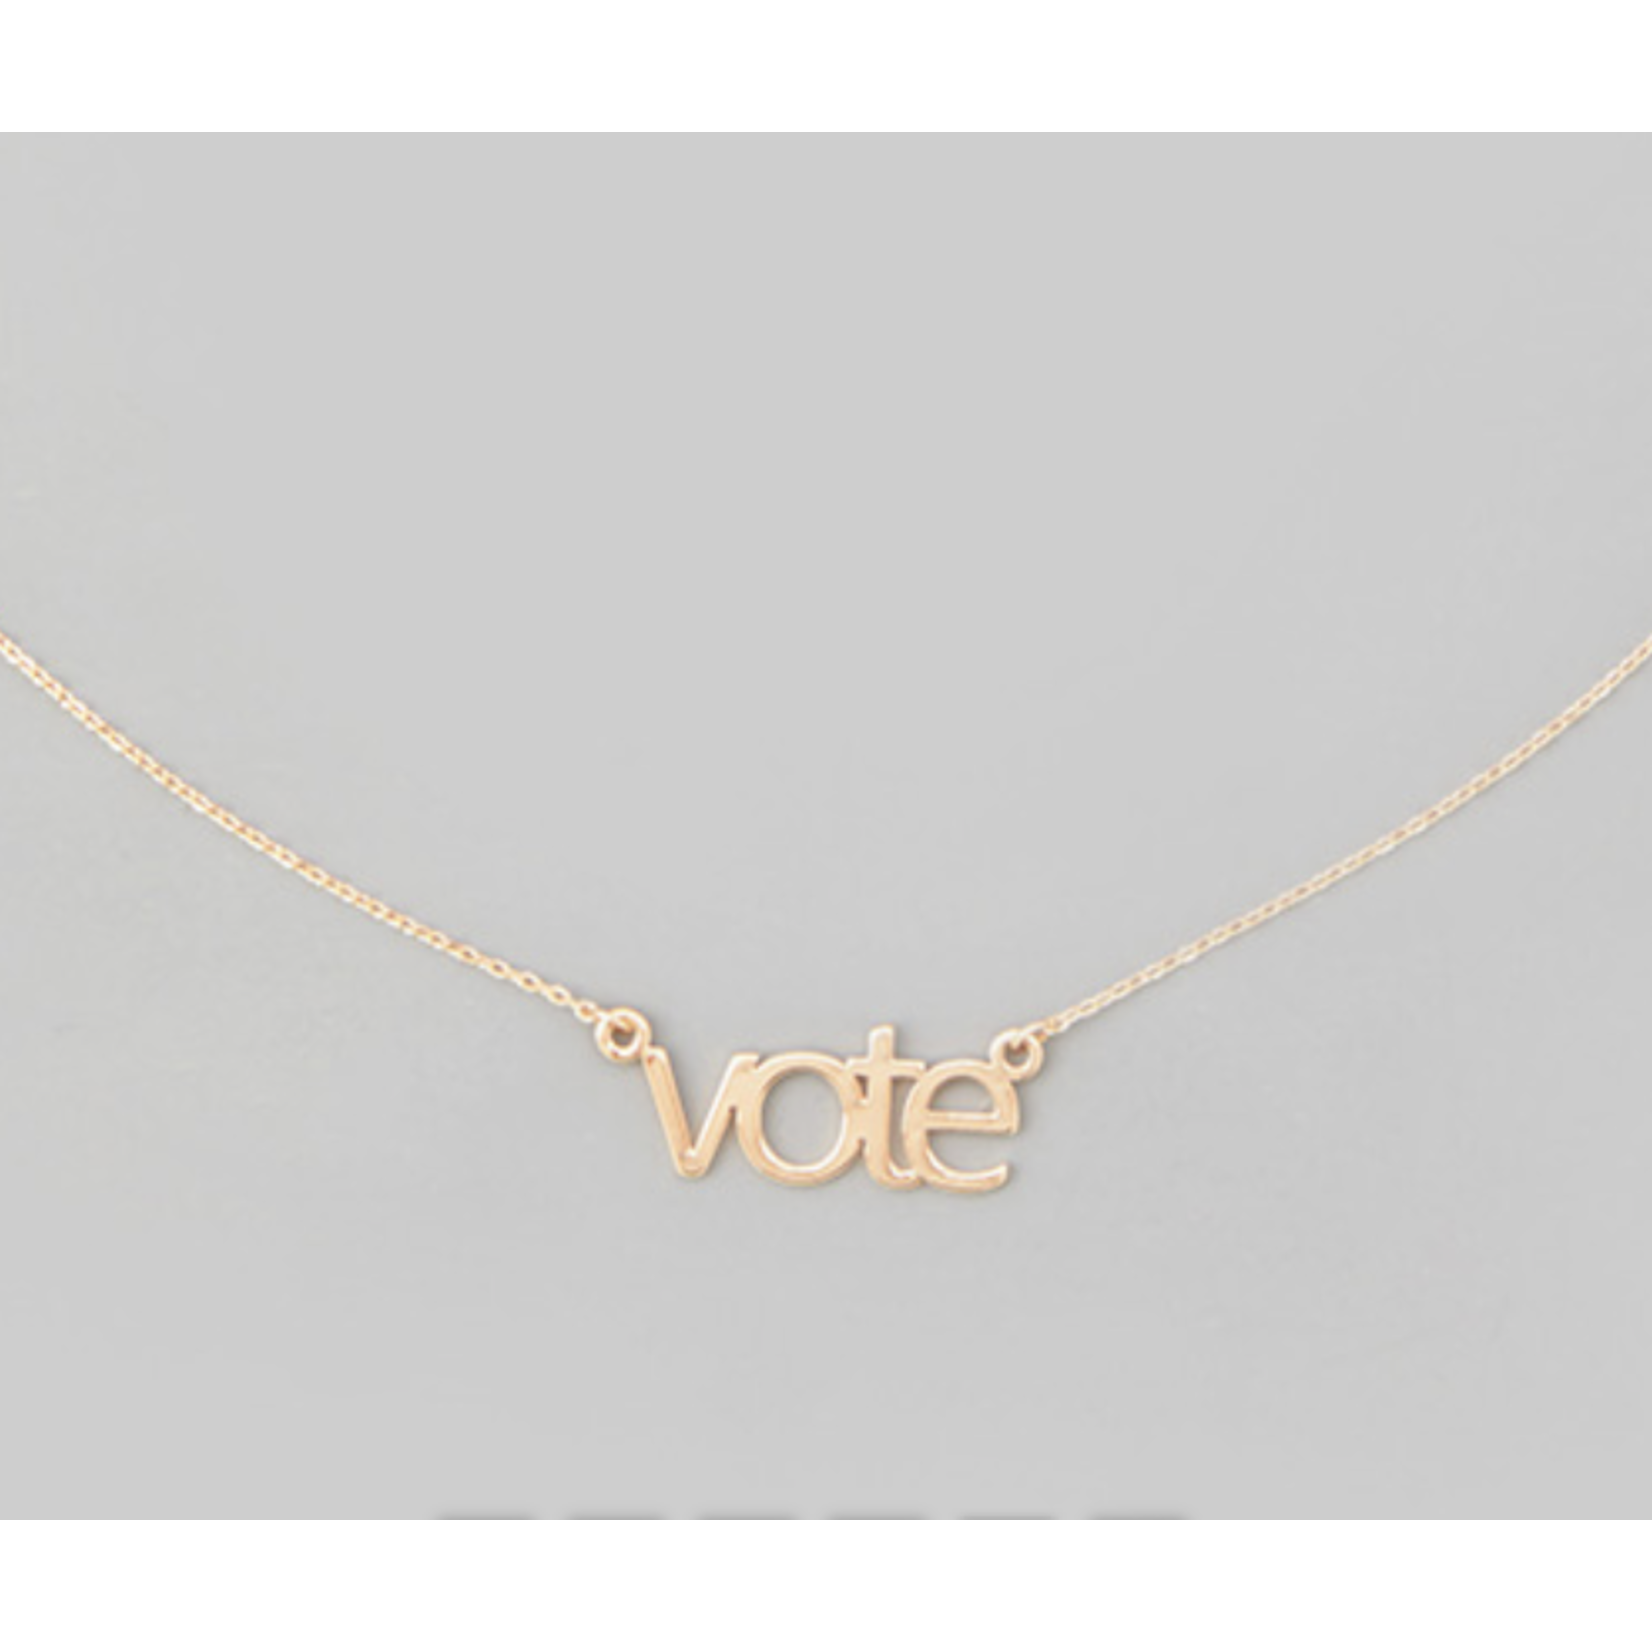 Necklace - Vote - Gold